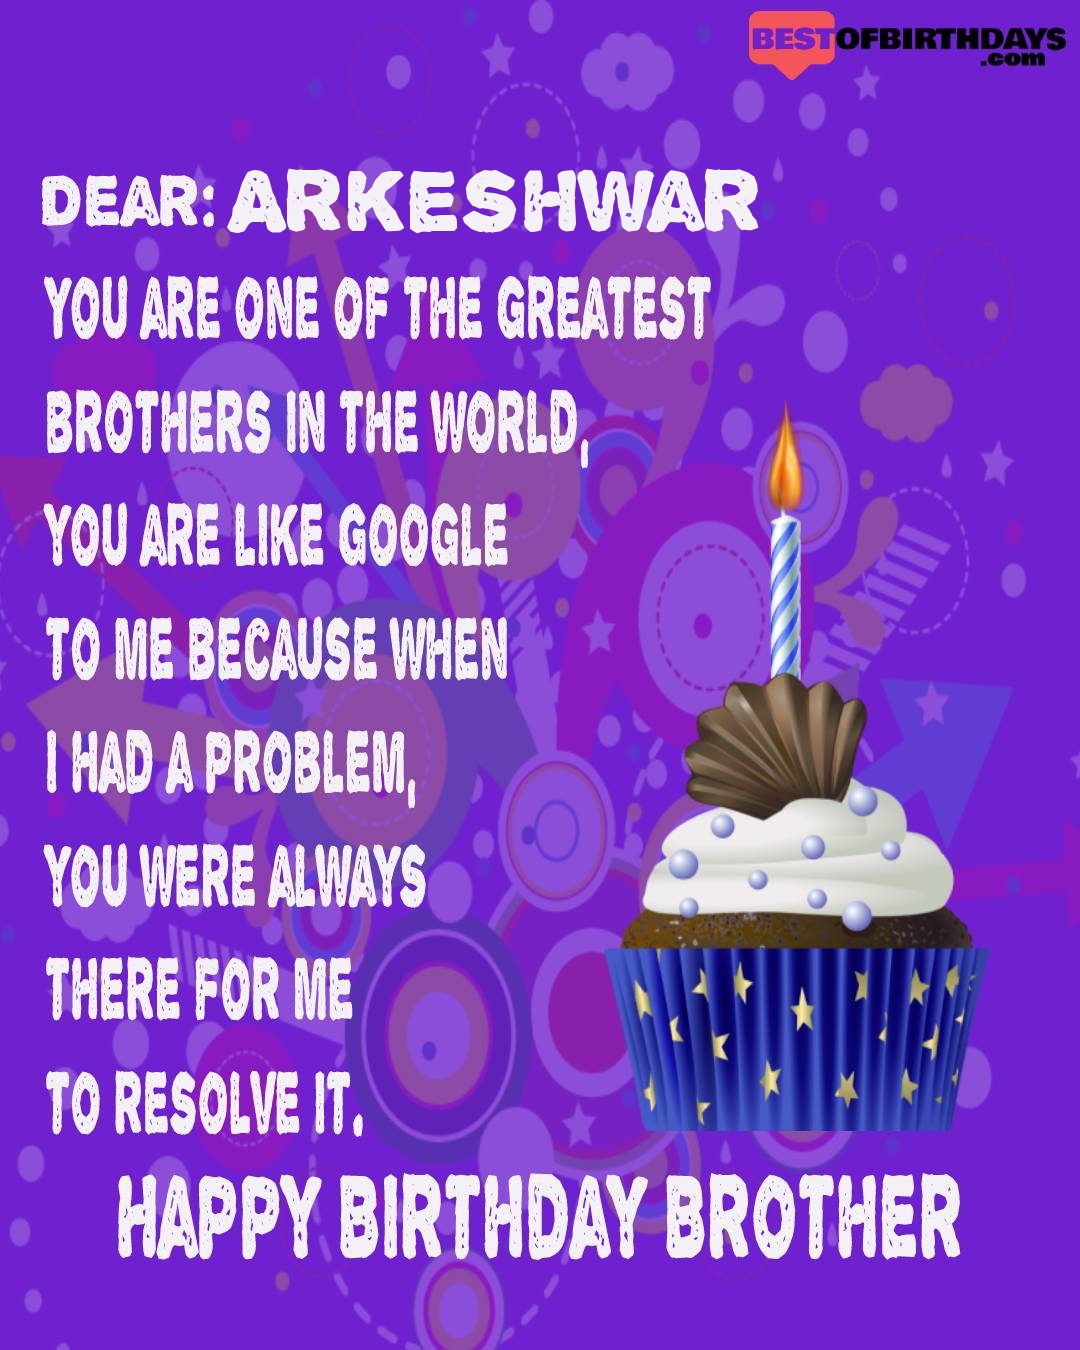 Happy birthday arkeshwar bhai brother bro